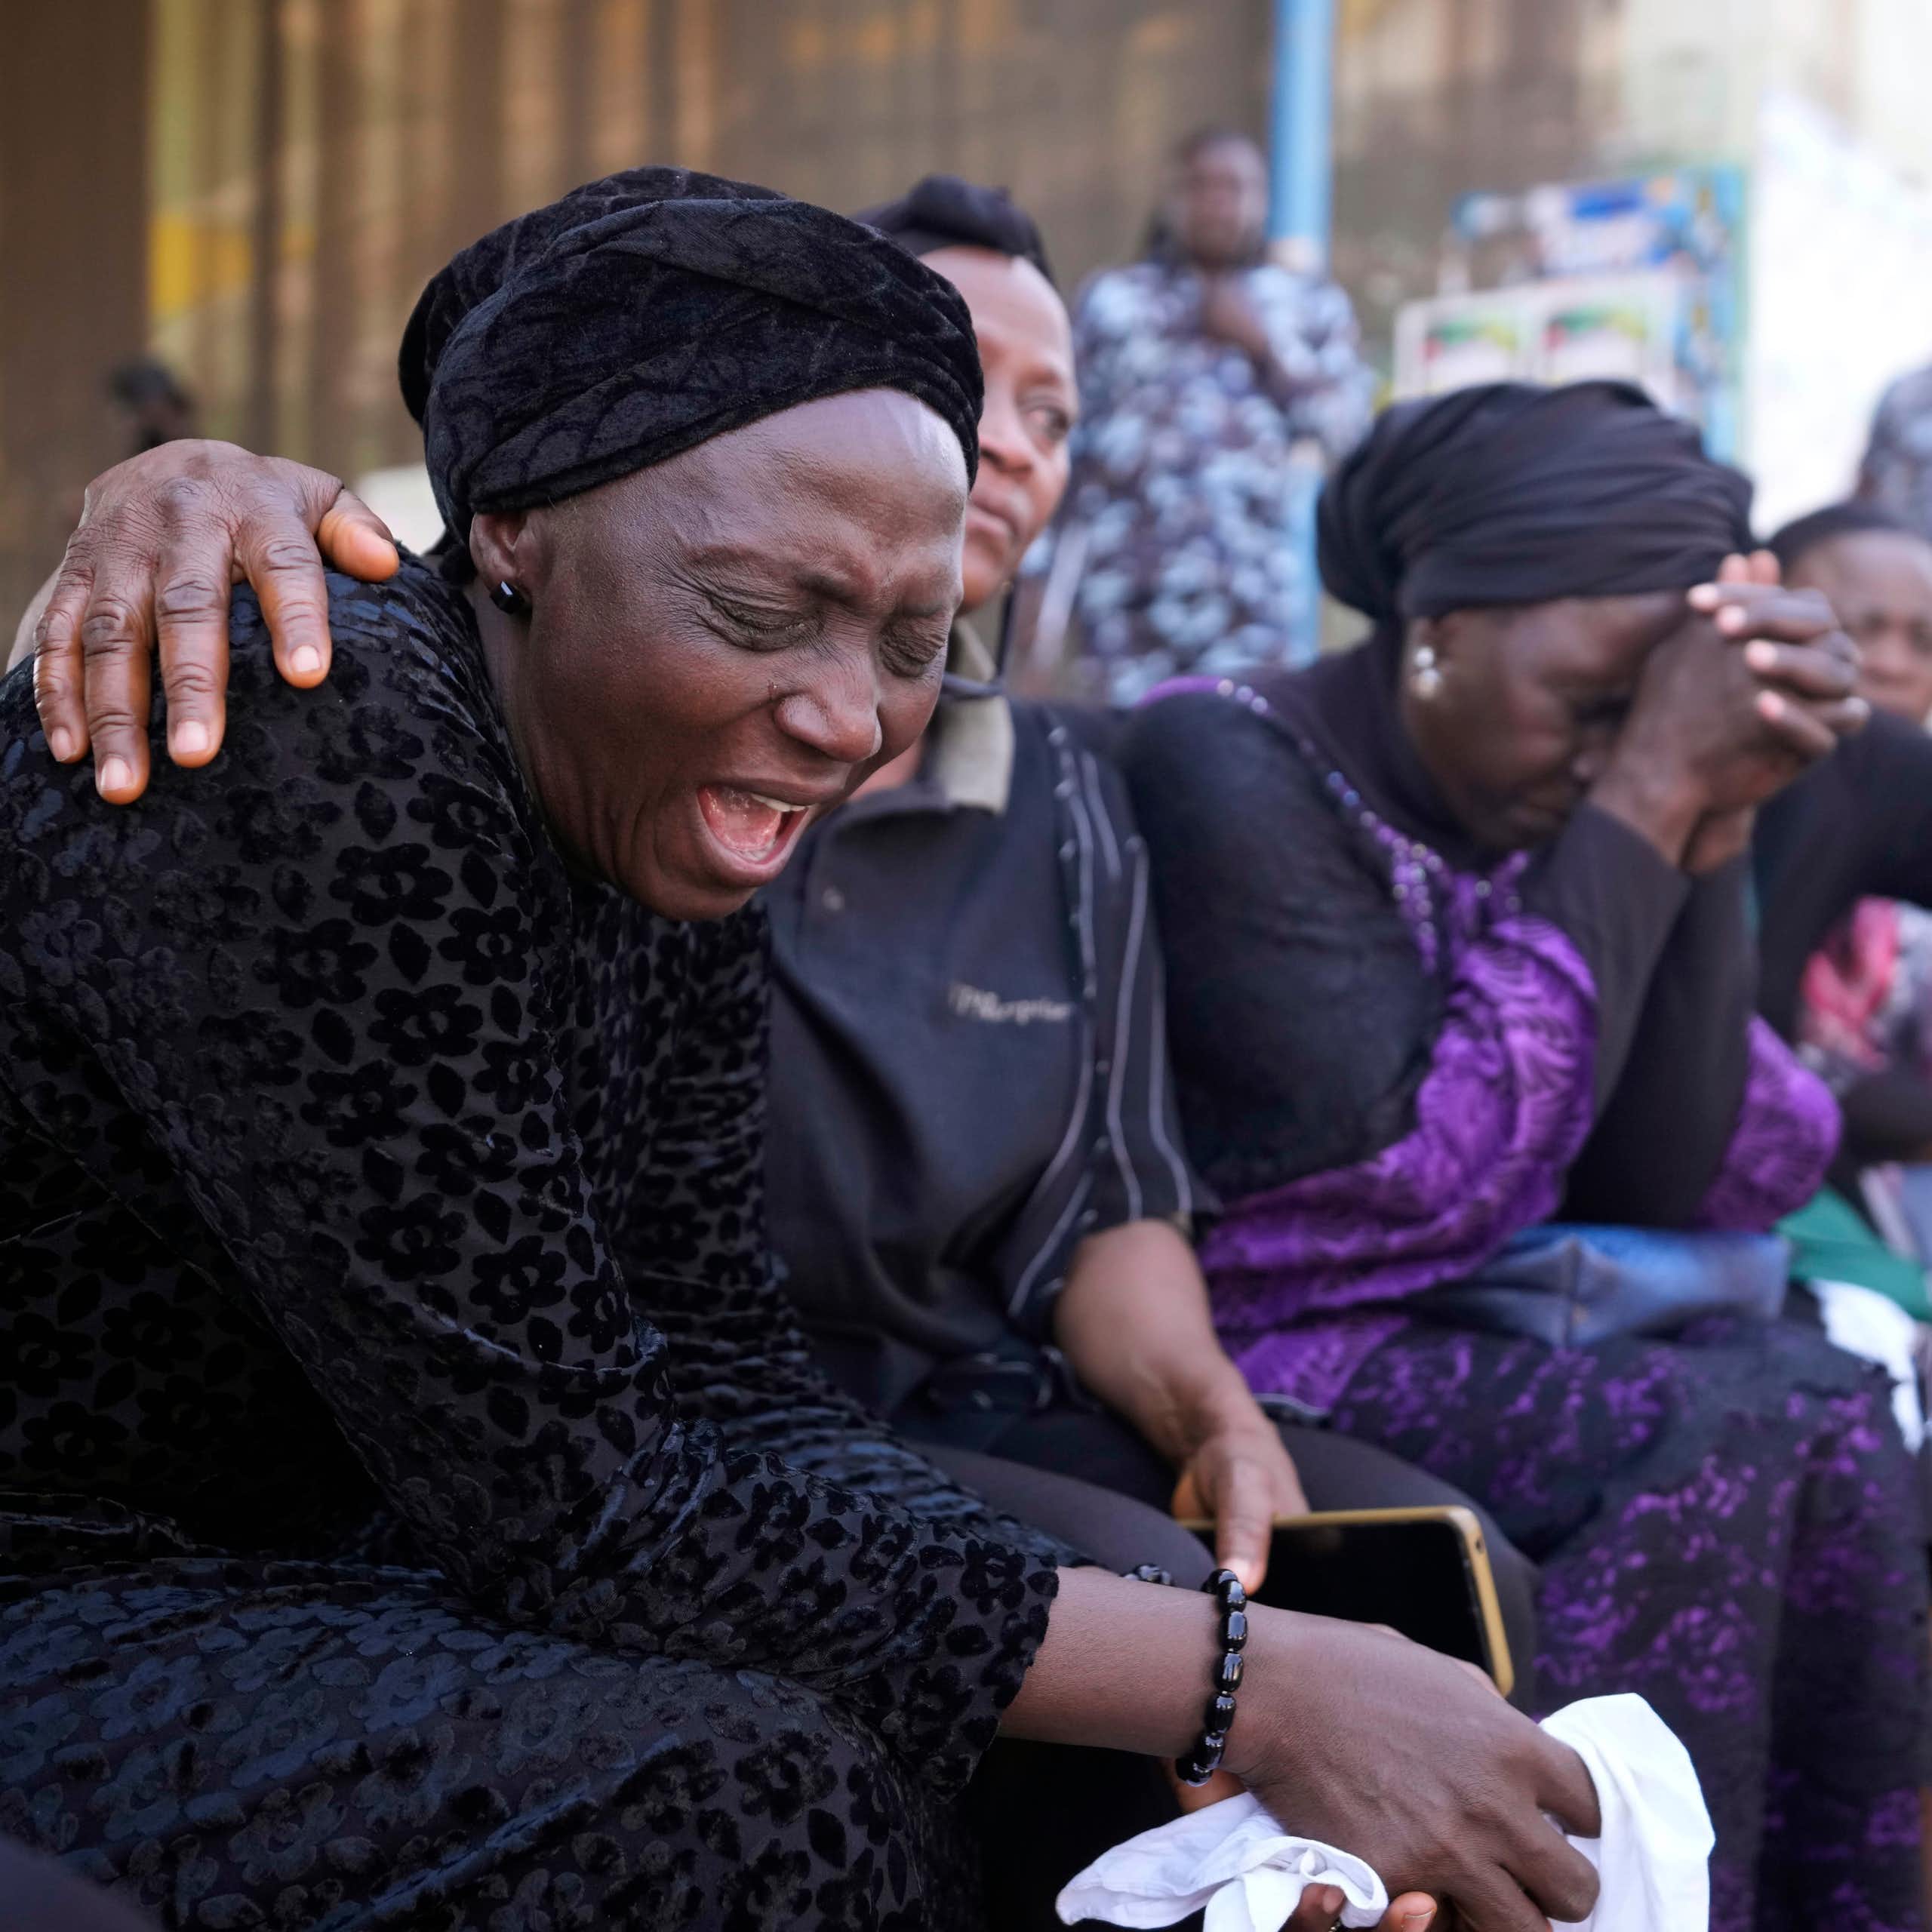 Women in Nigeria cry over attacks on civilians.